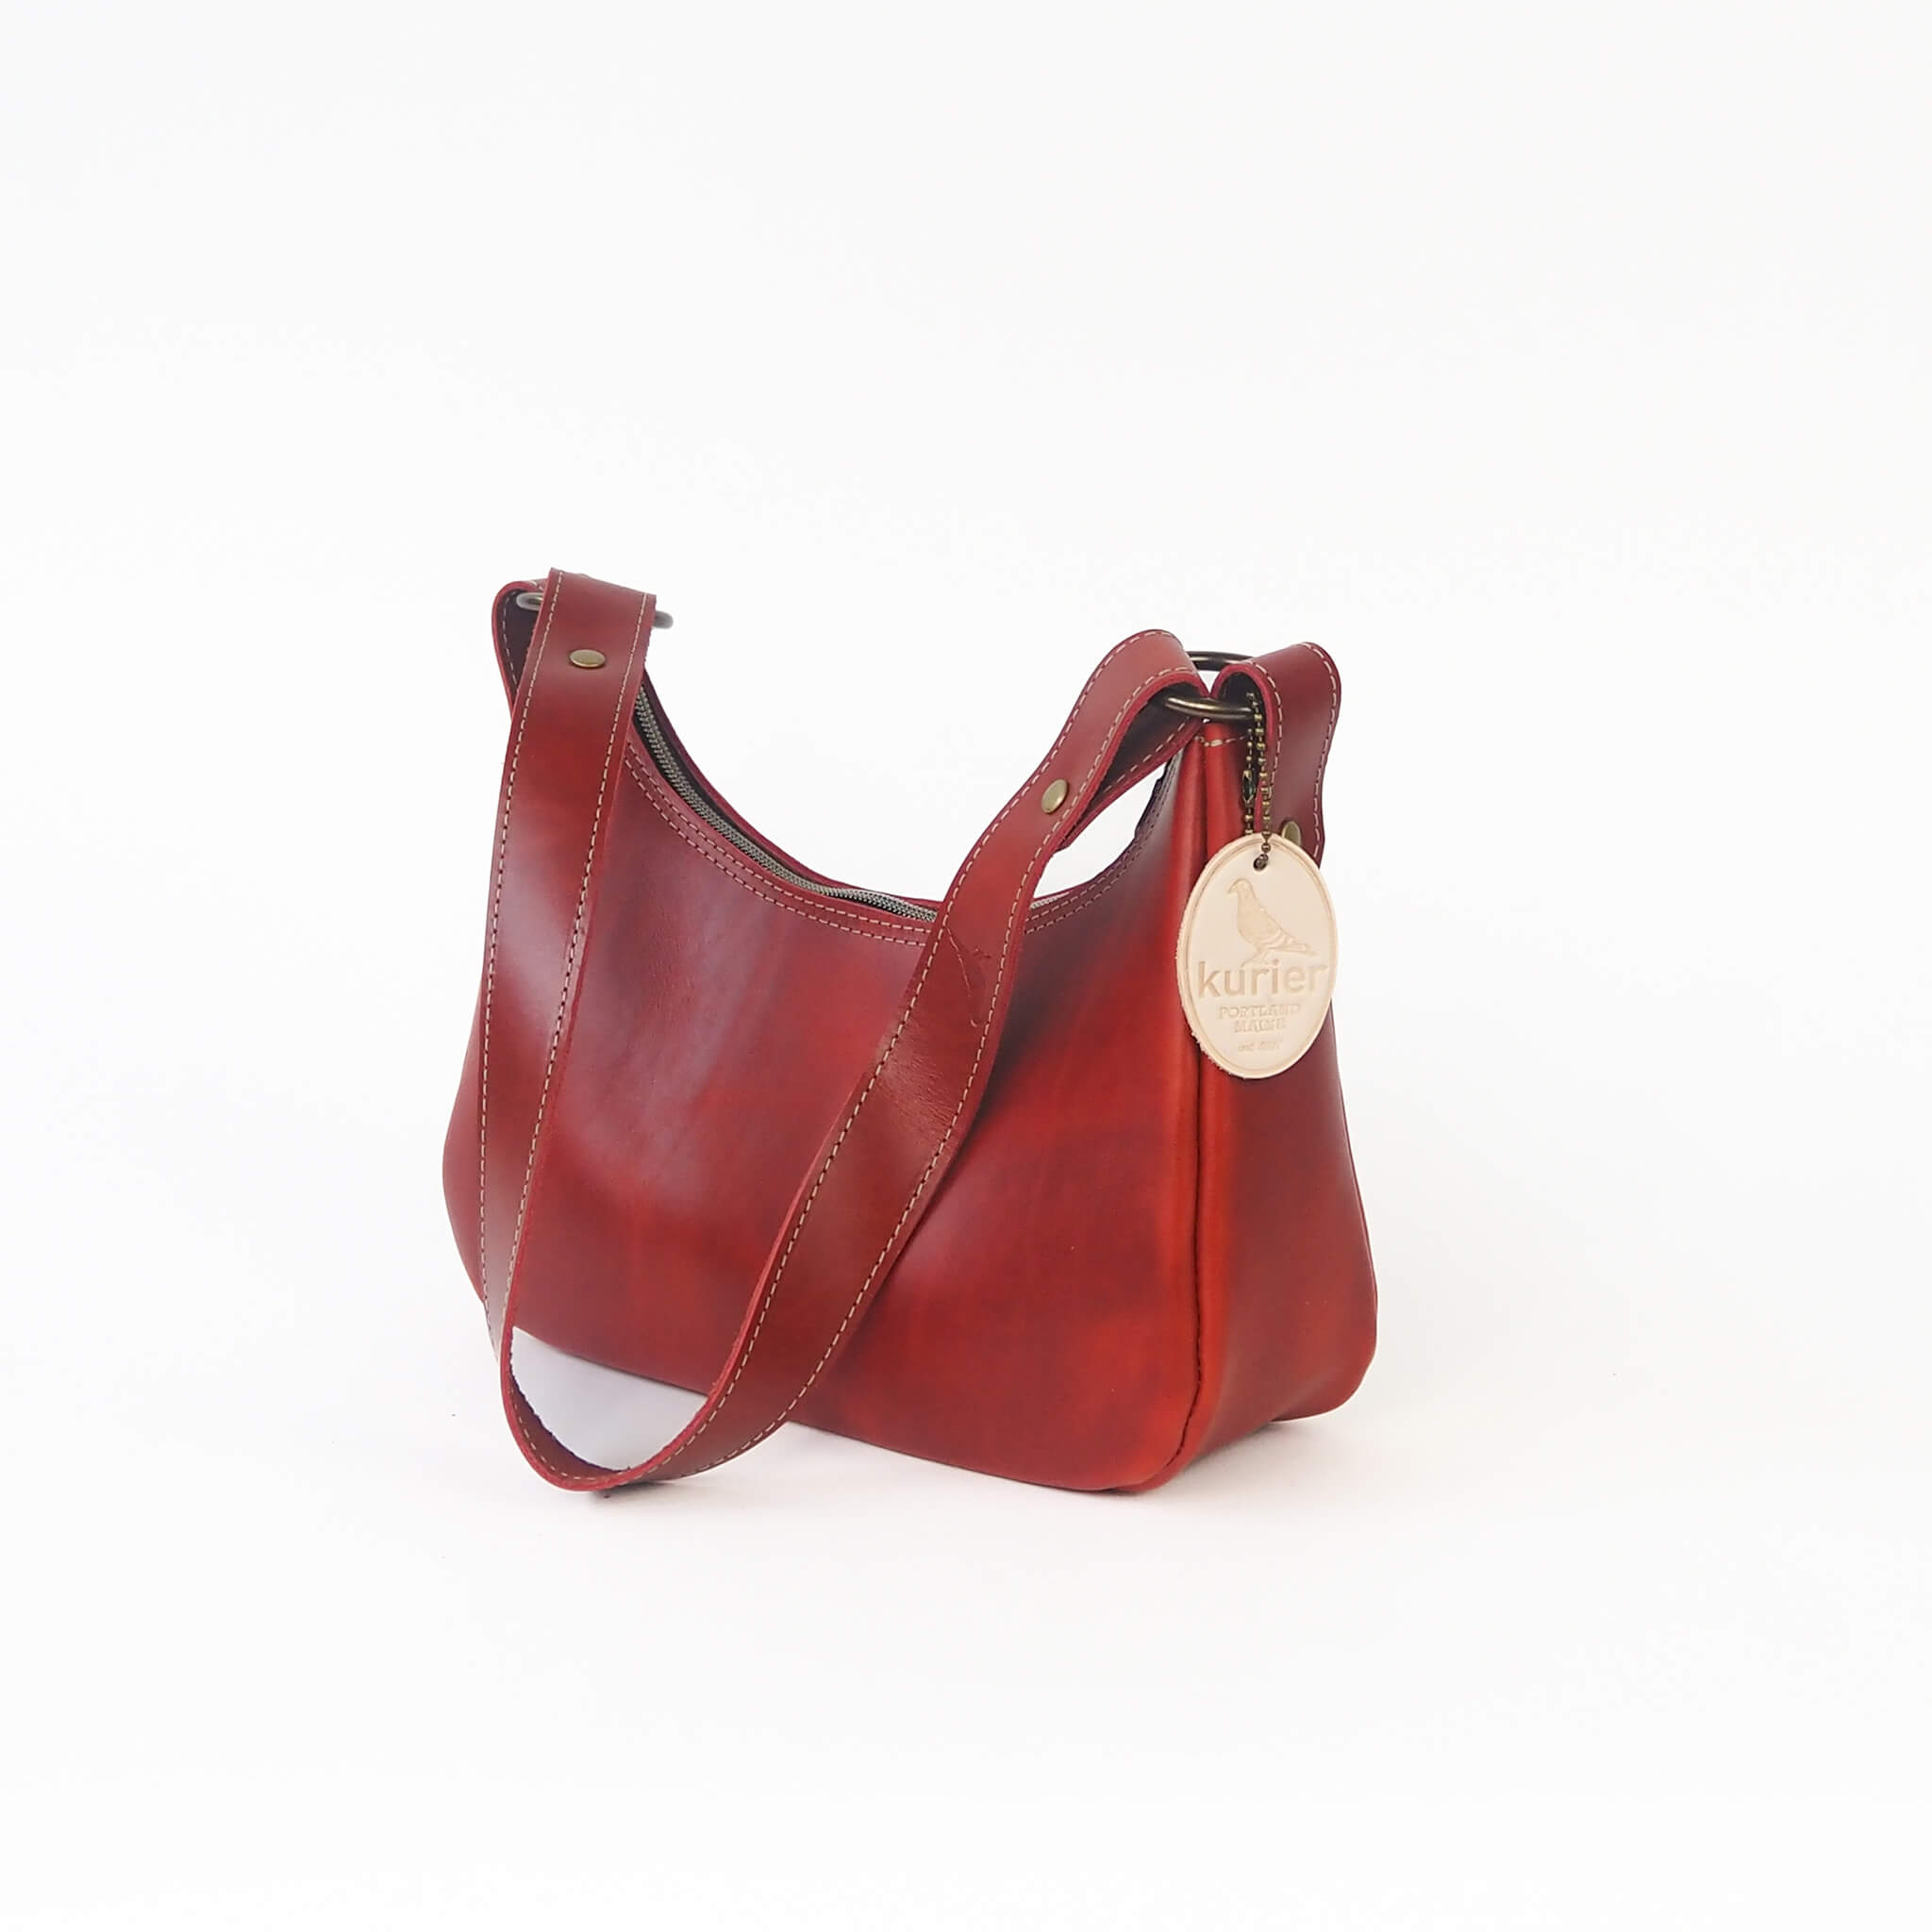 gigi handbag compact zipper handmade leather - cherry side view